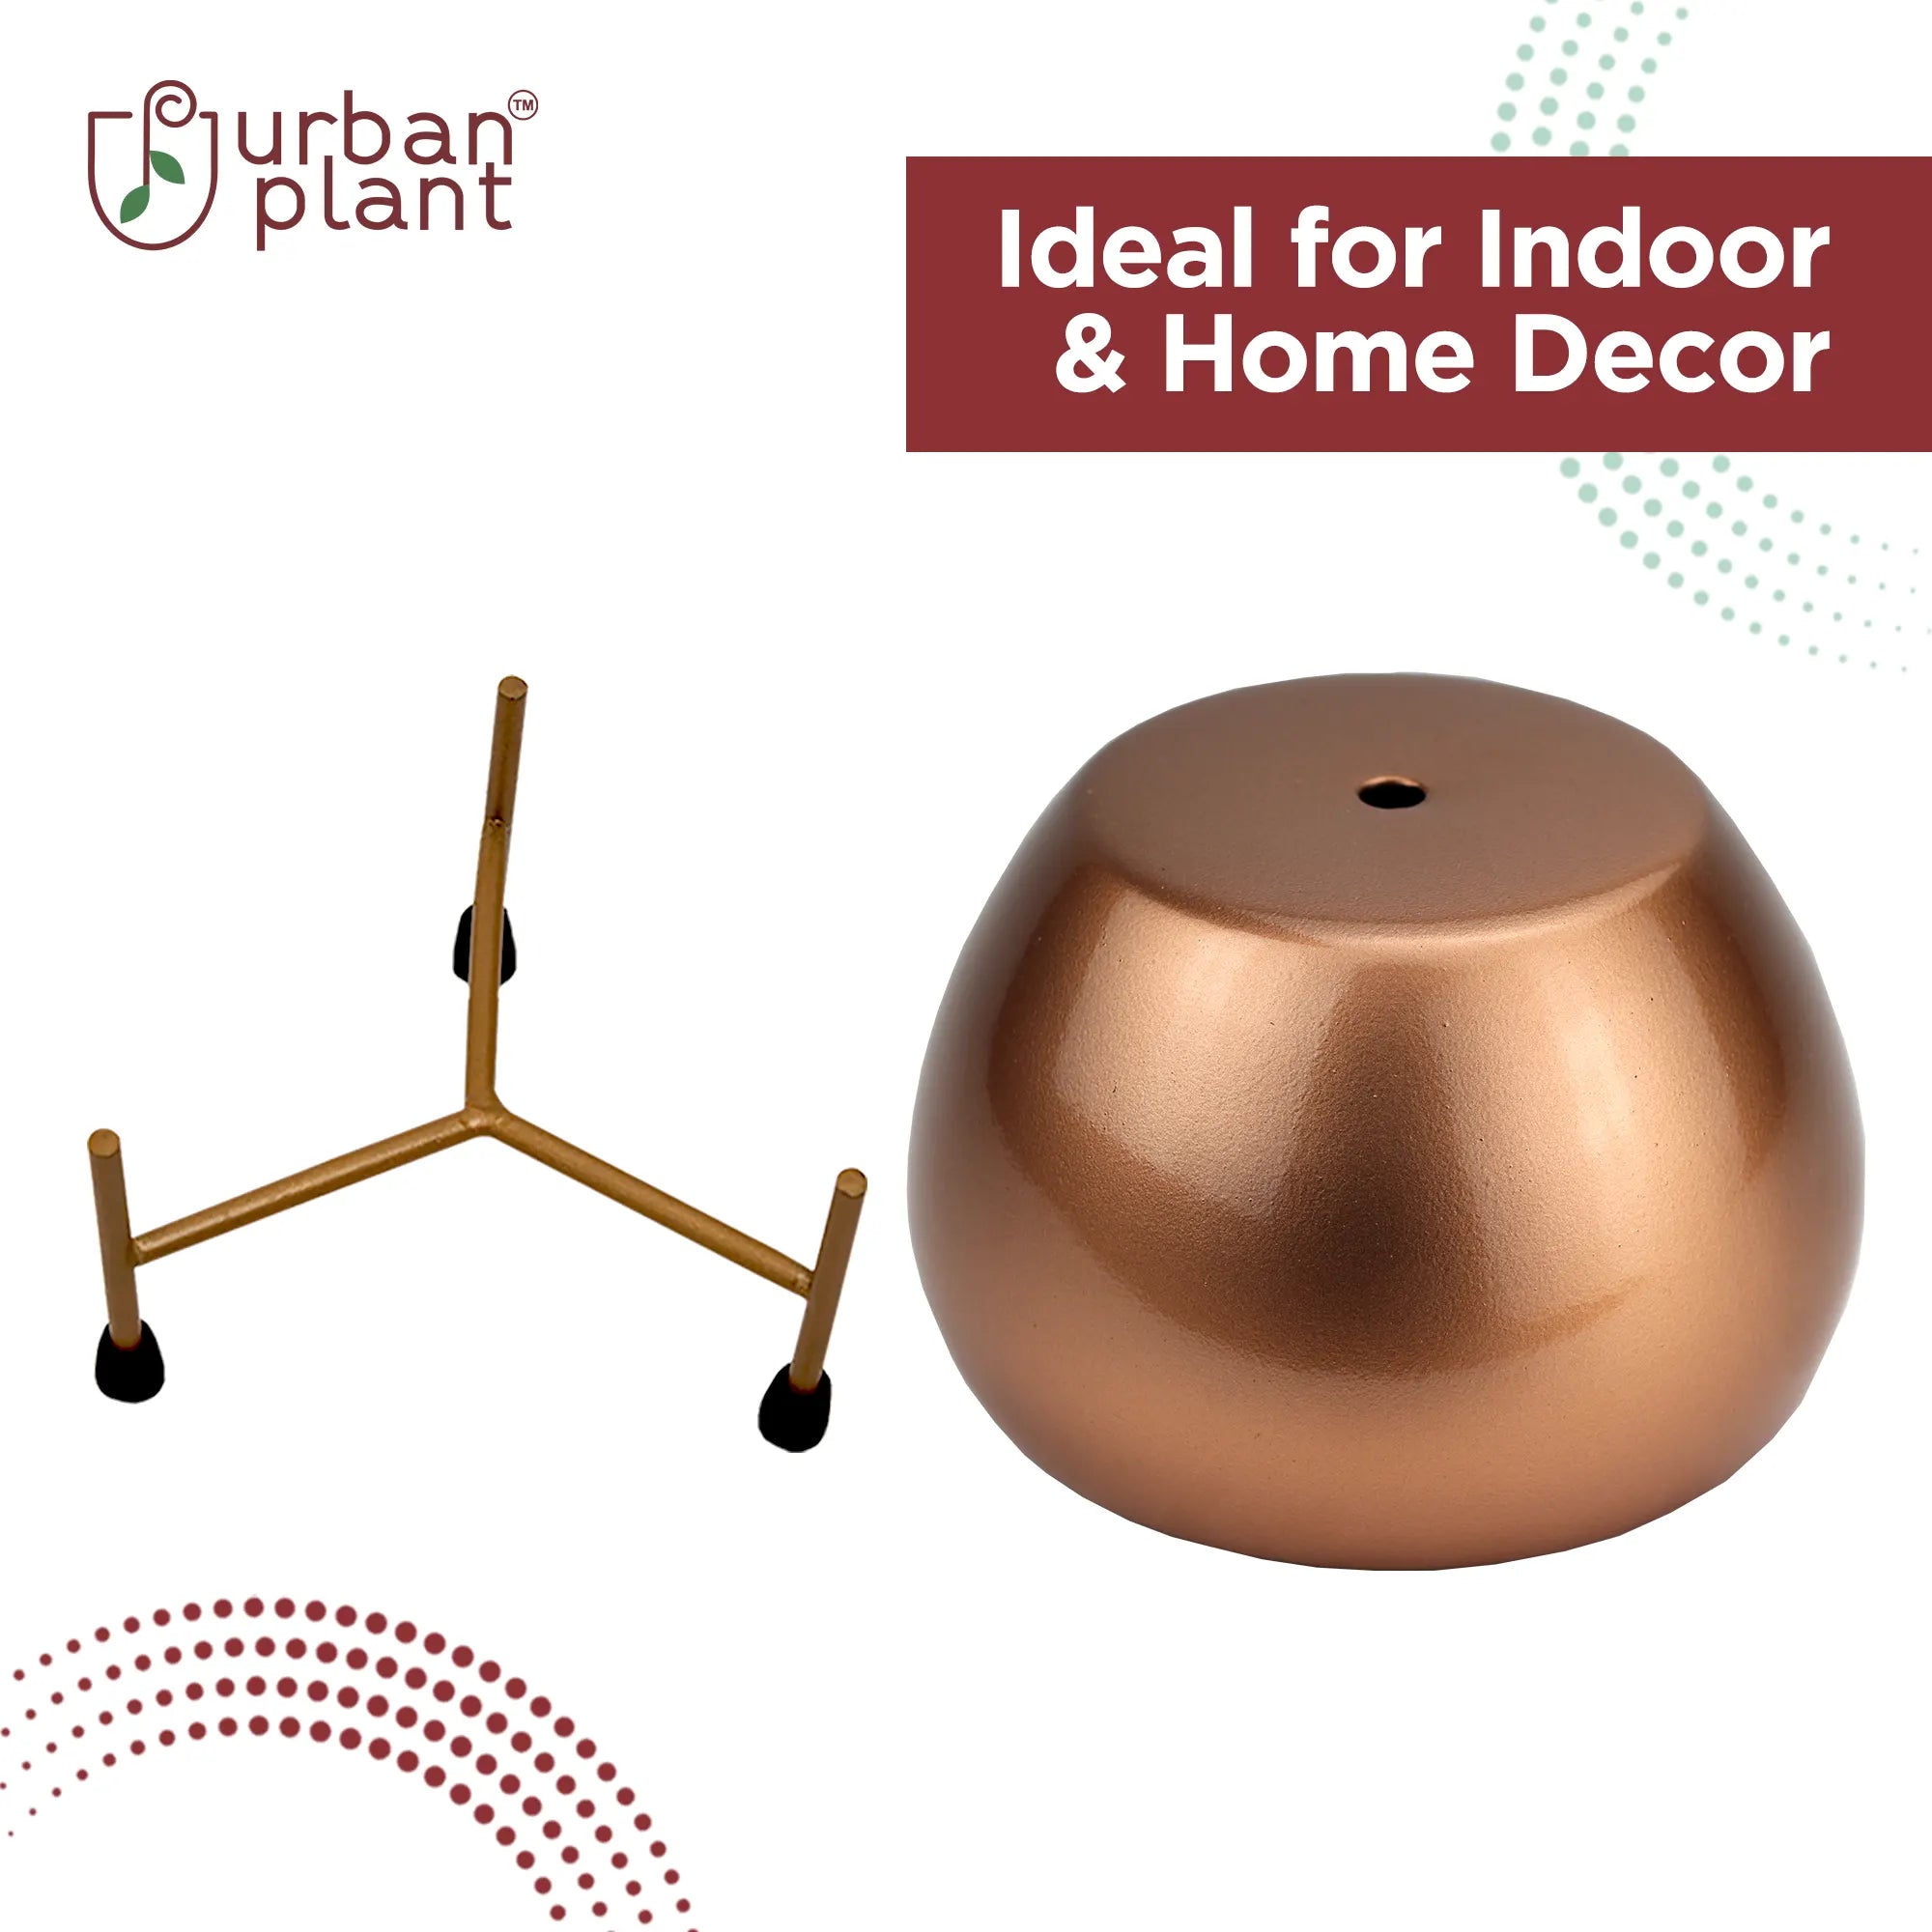 Classy & Vibrant Design Round Metal Pot For Home Decor Metal Pot Urban Plant 